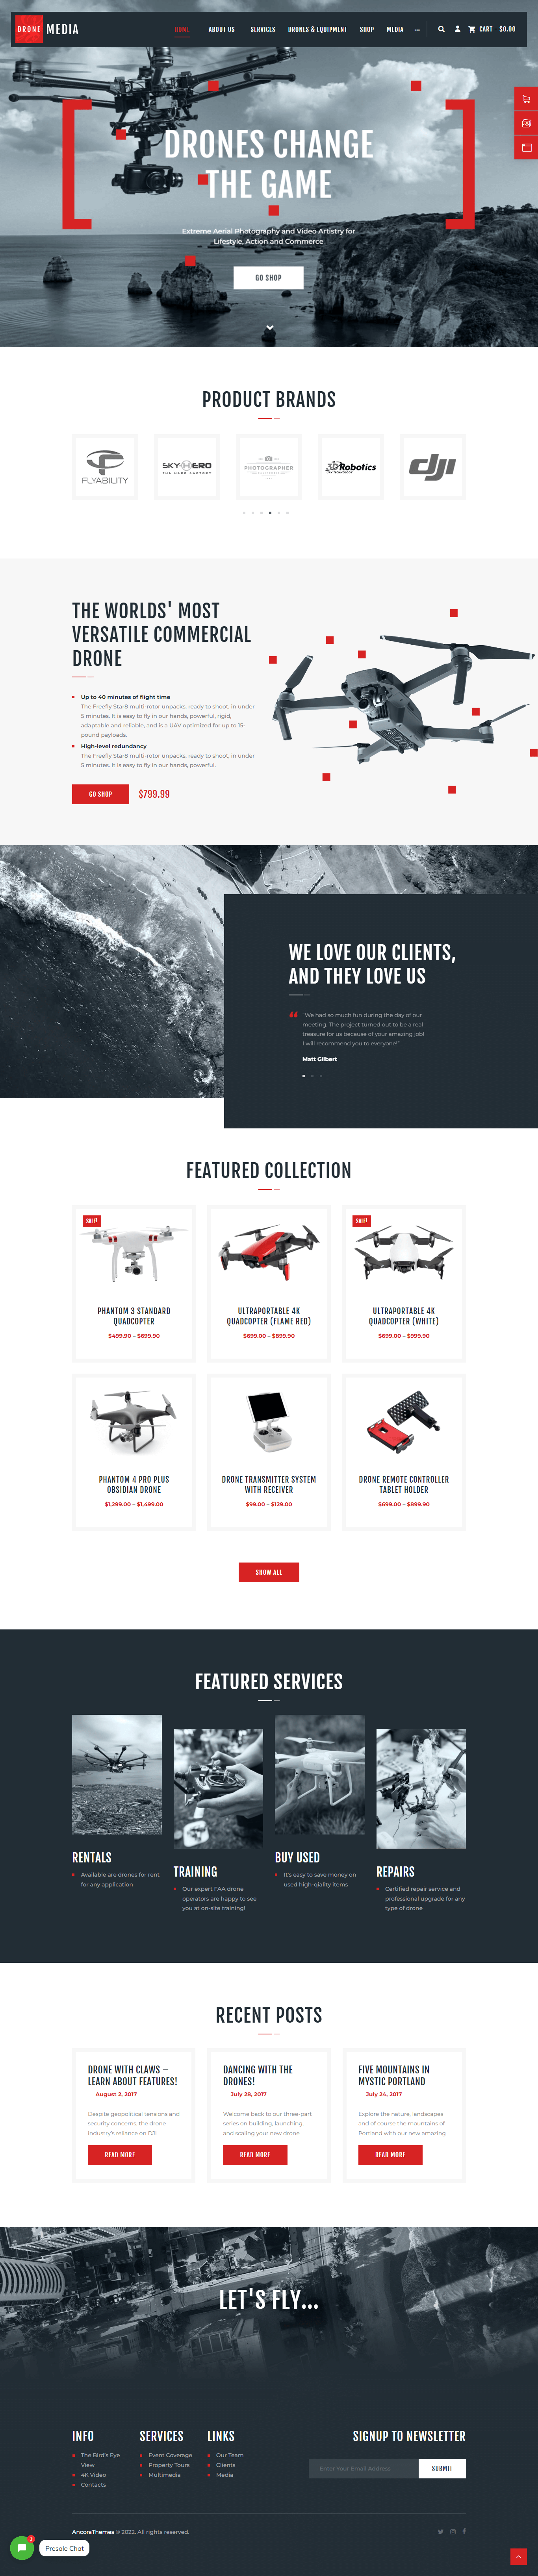 drone media home shop